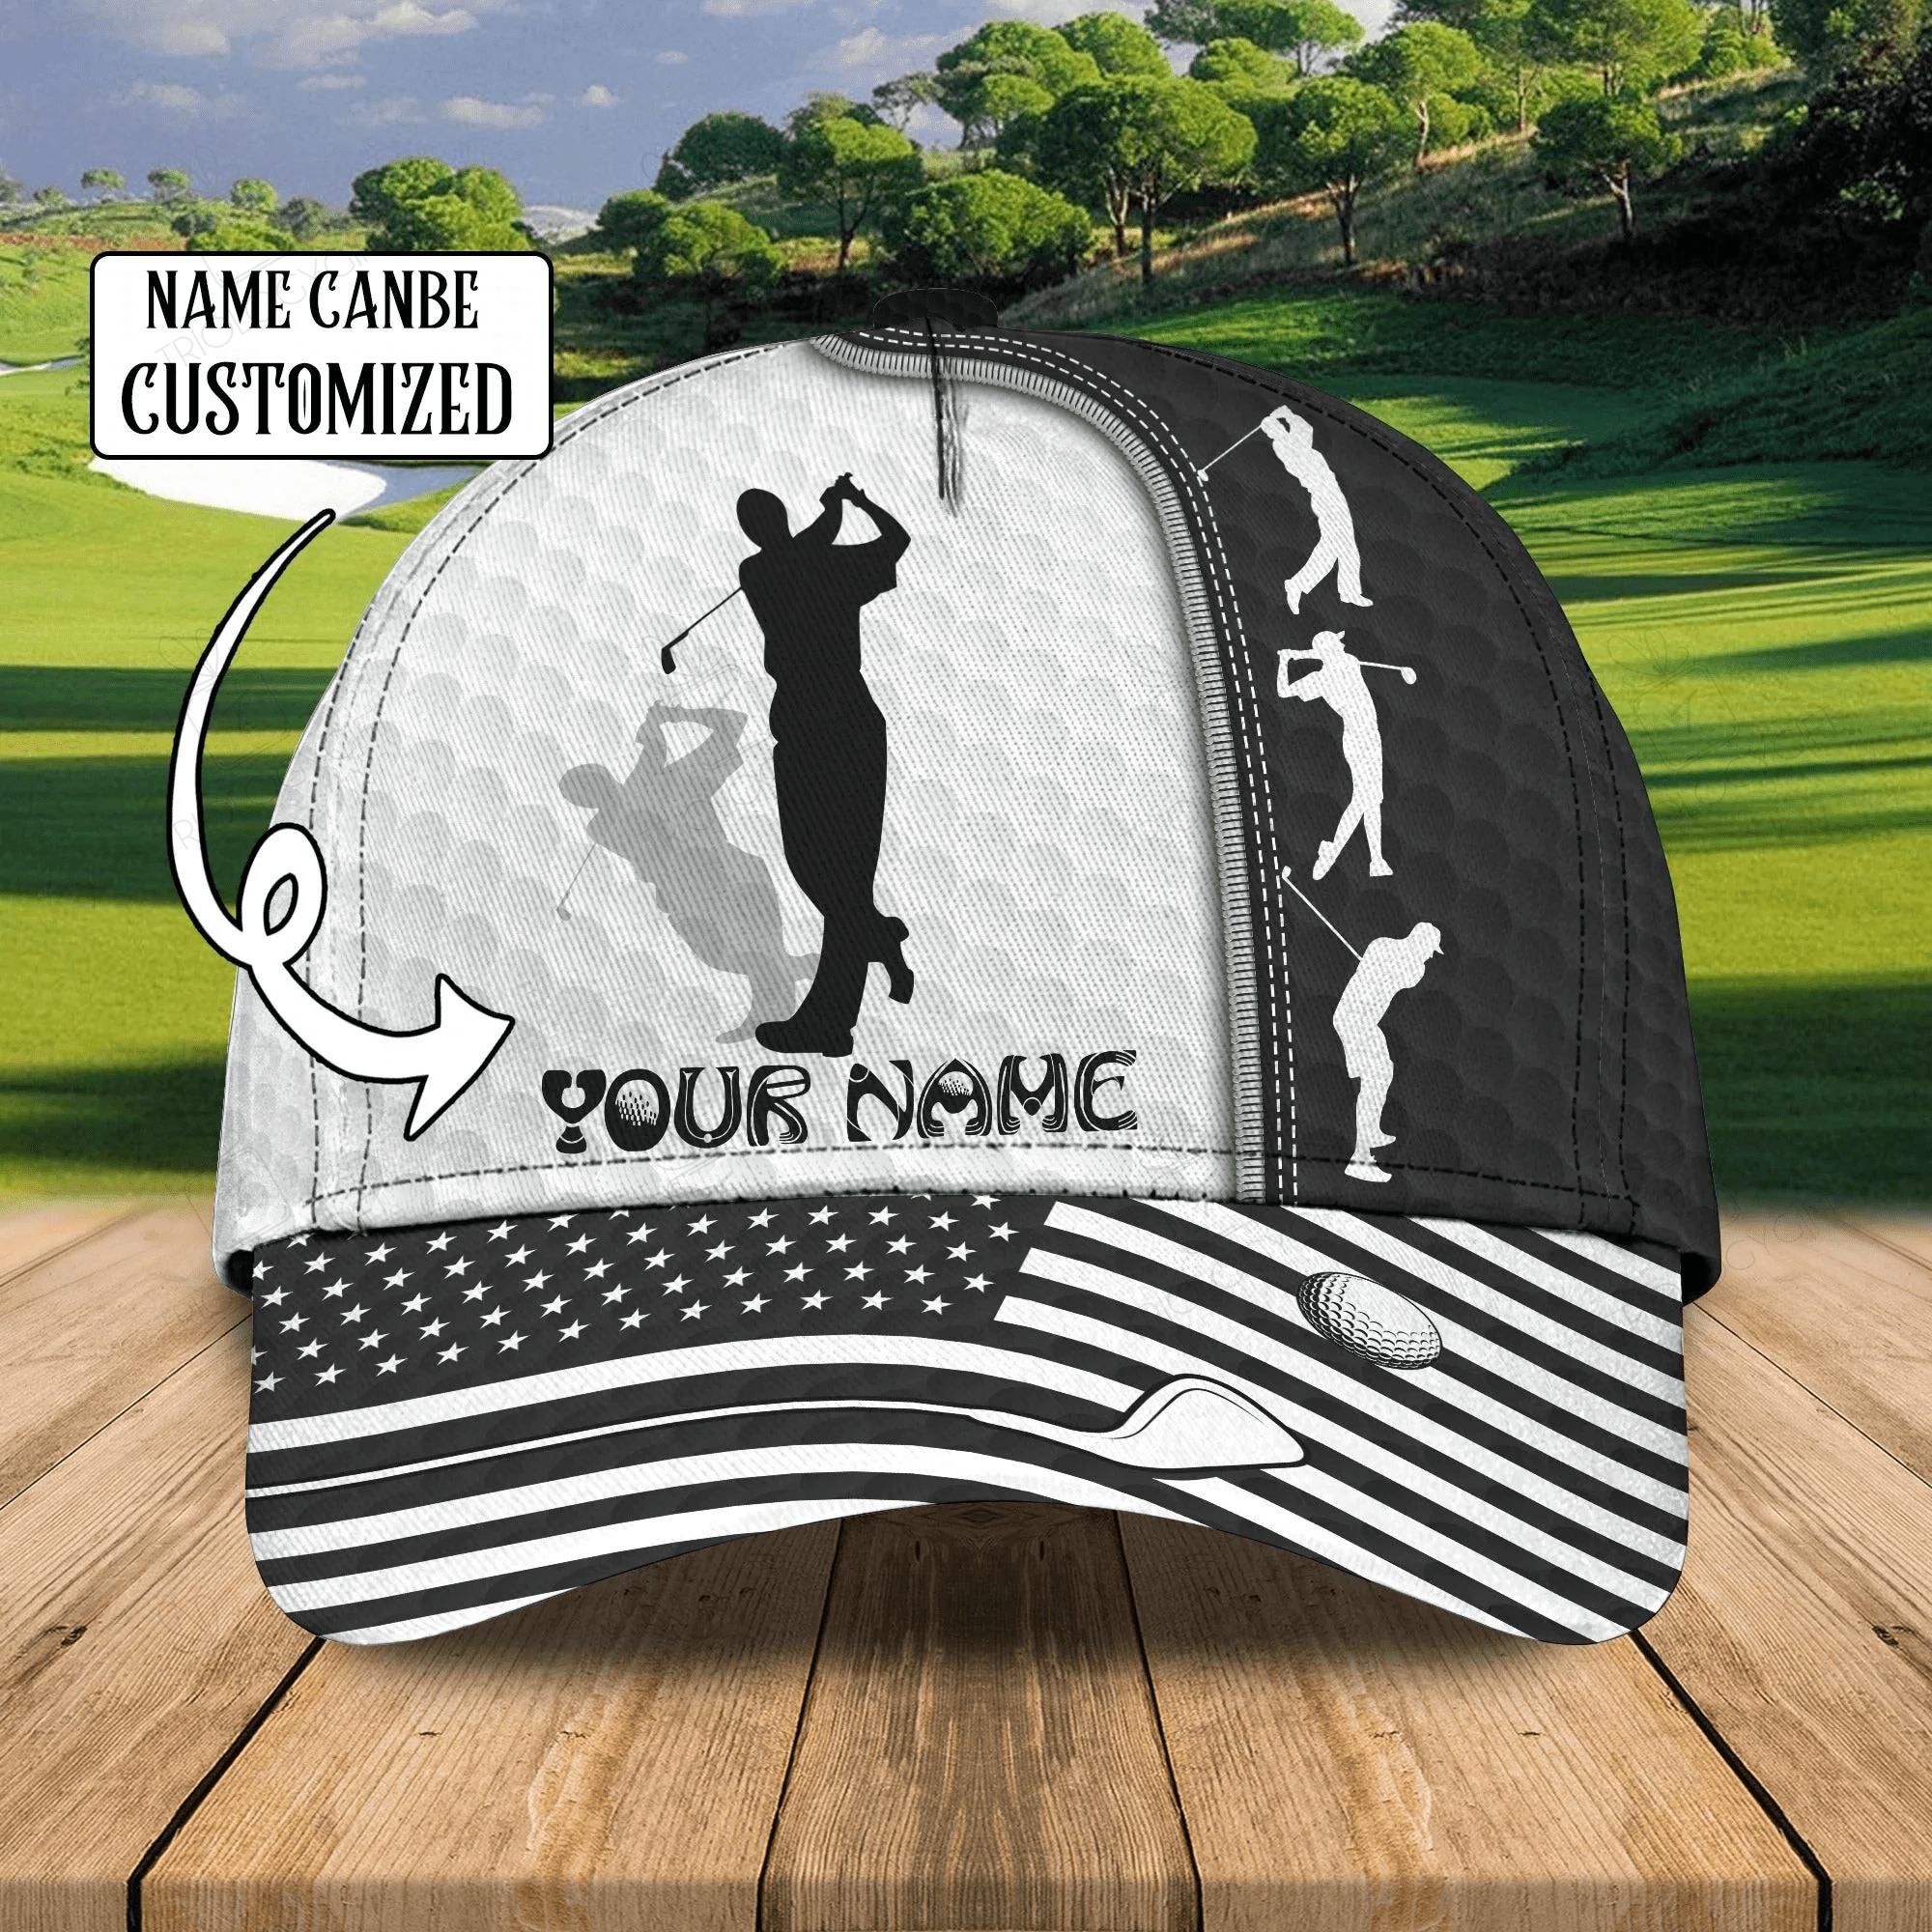 Personalized 3D Full Printed Baseball Cap For Golfer, Goft Men Caps, Golf Man Hat, Cool Golf Hats